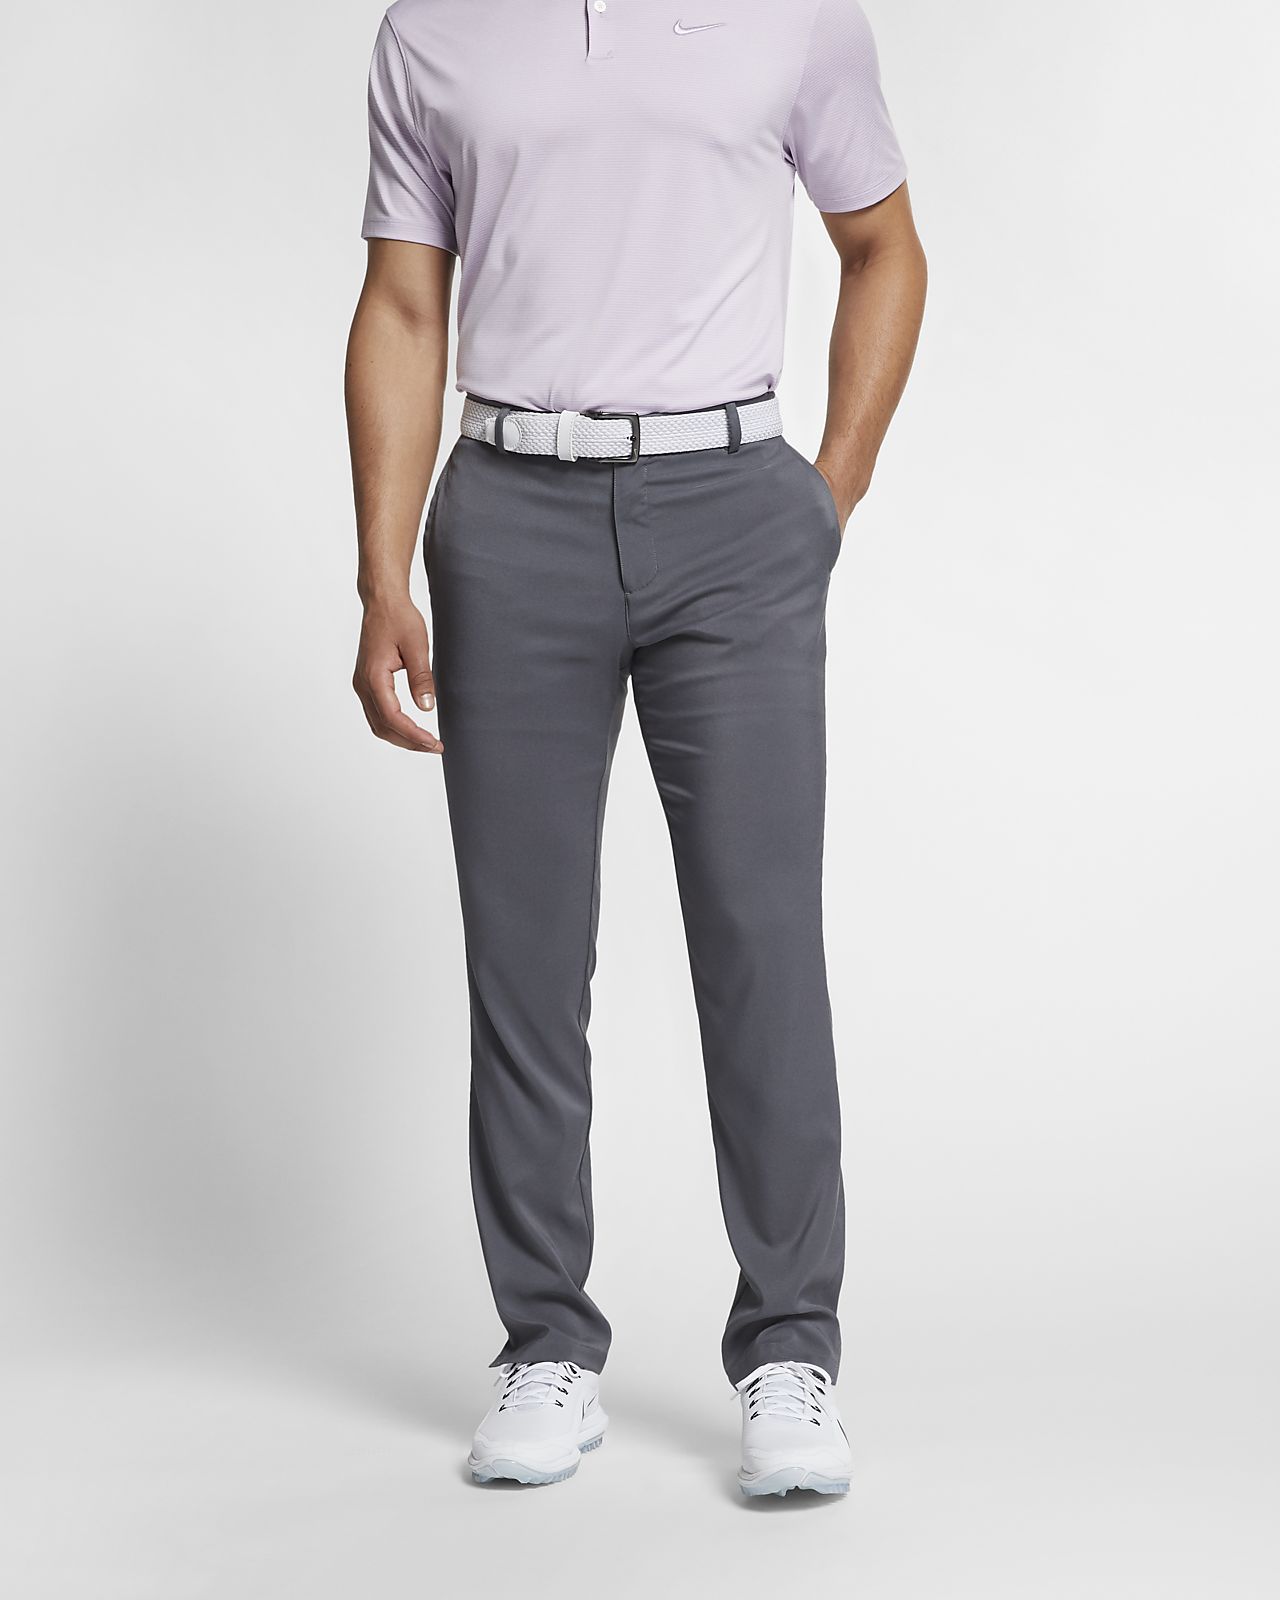 Mens Golf Pants Size 42 | Bruin Blog